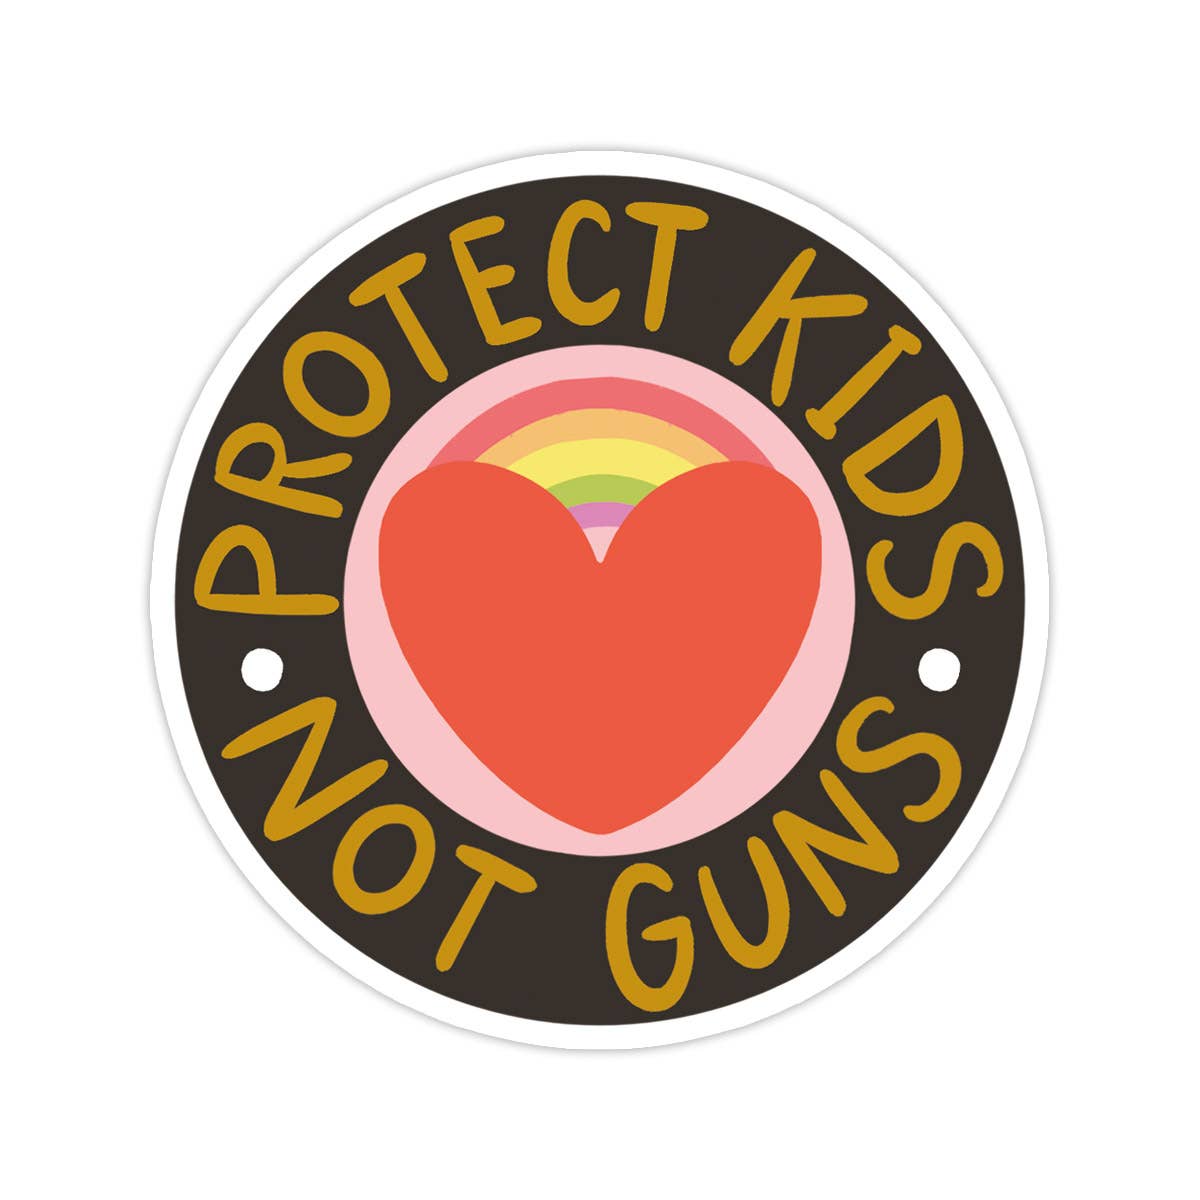 Protect Kids Not Guns Vinyl Sticker - Spiral Circle